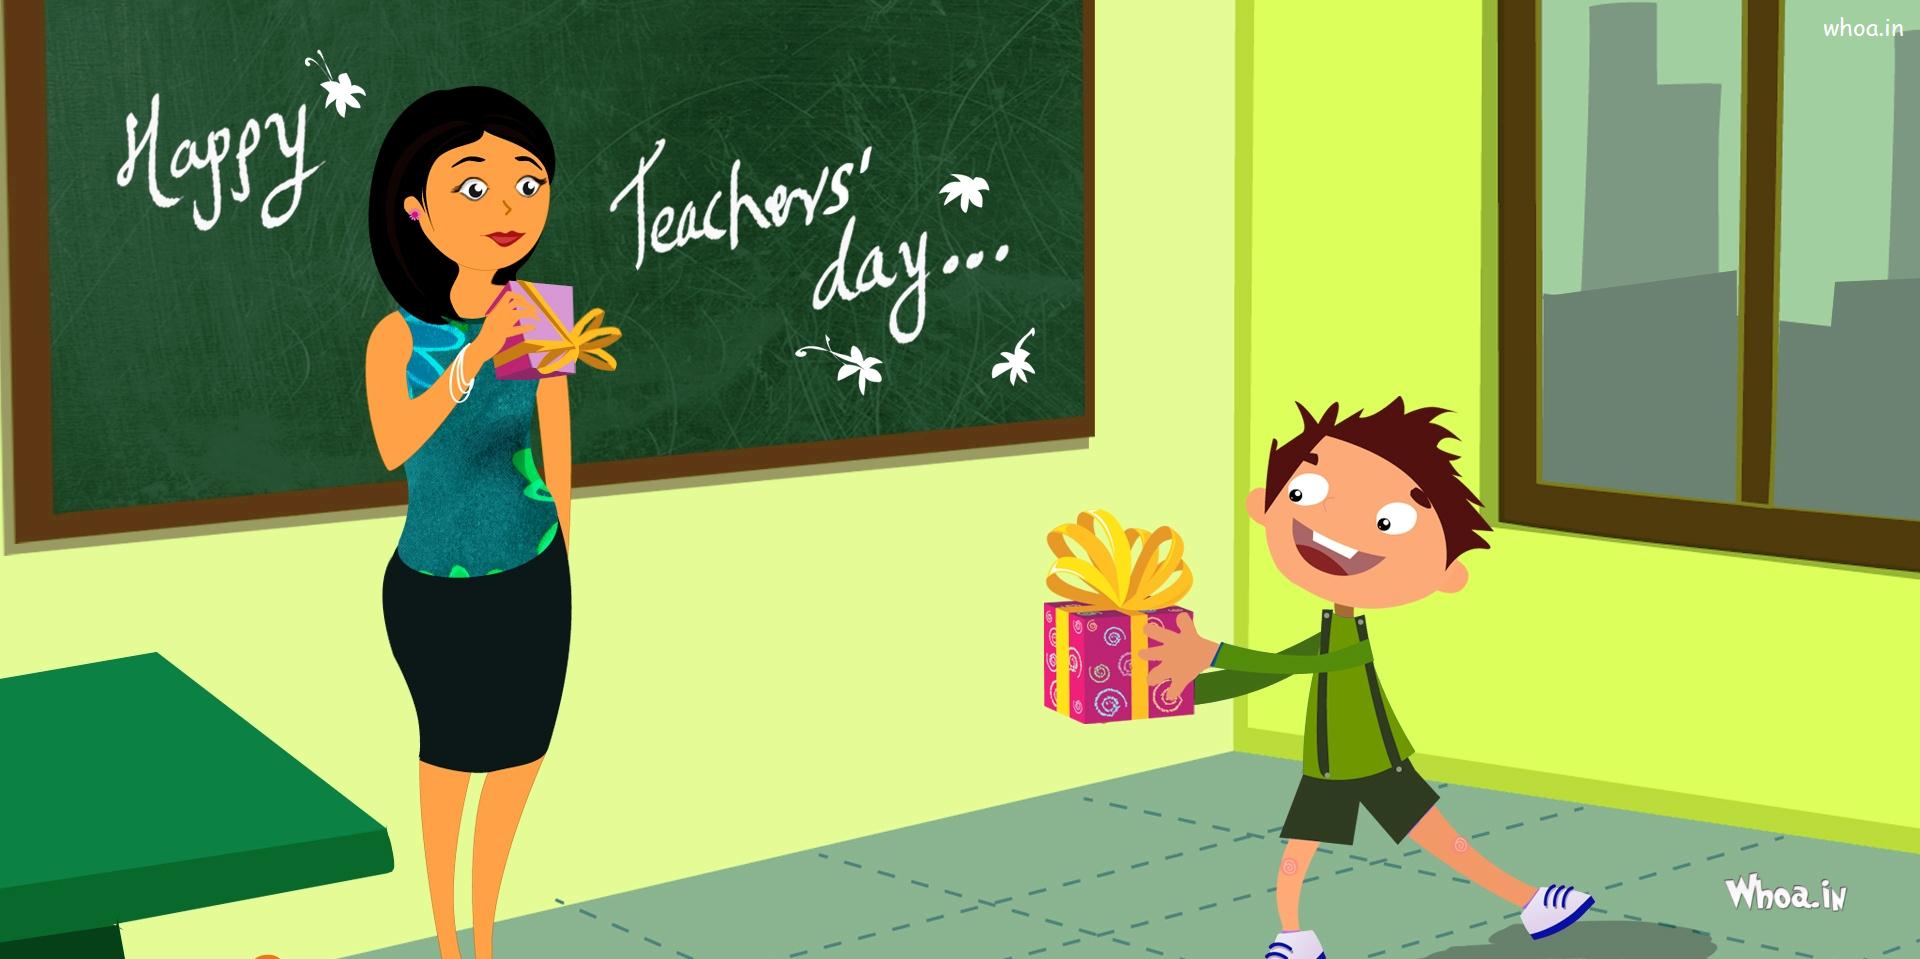 Teachers Day Cartoons Images | imagebasket.net